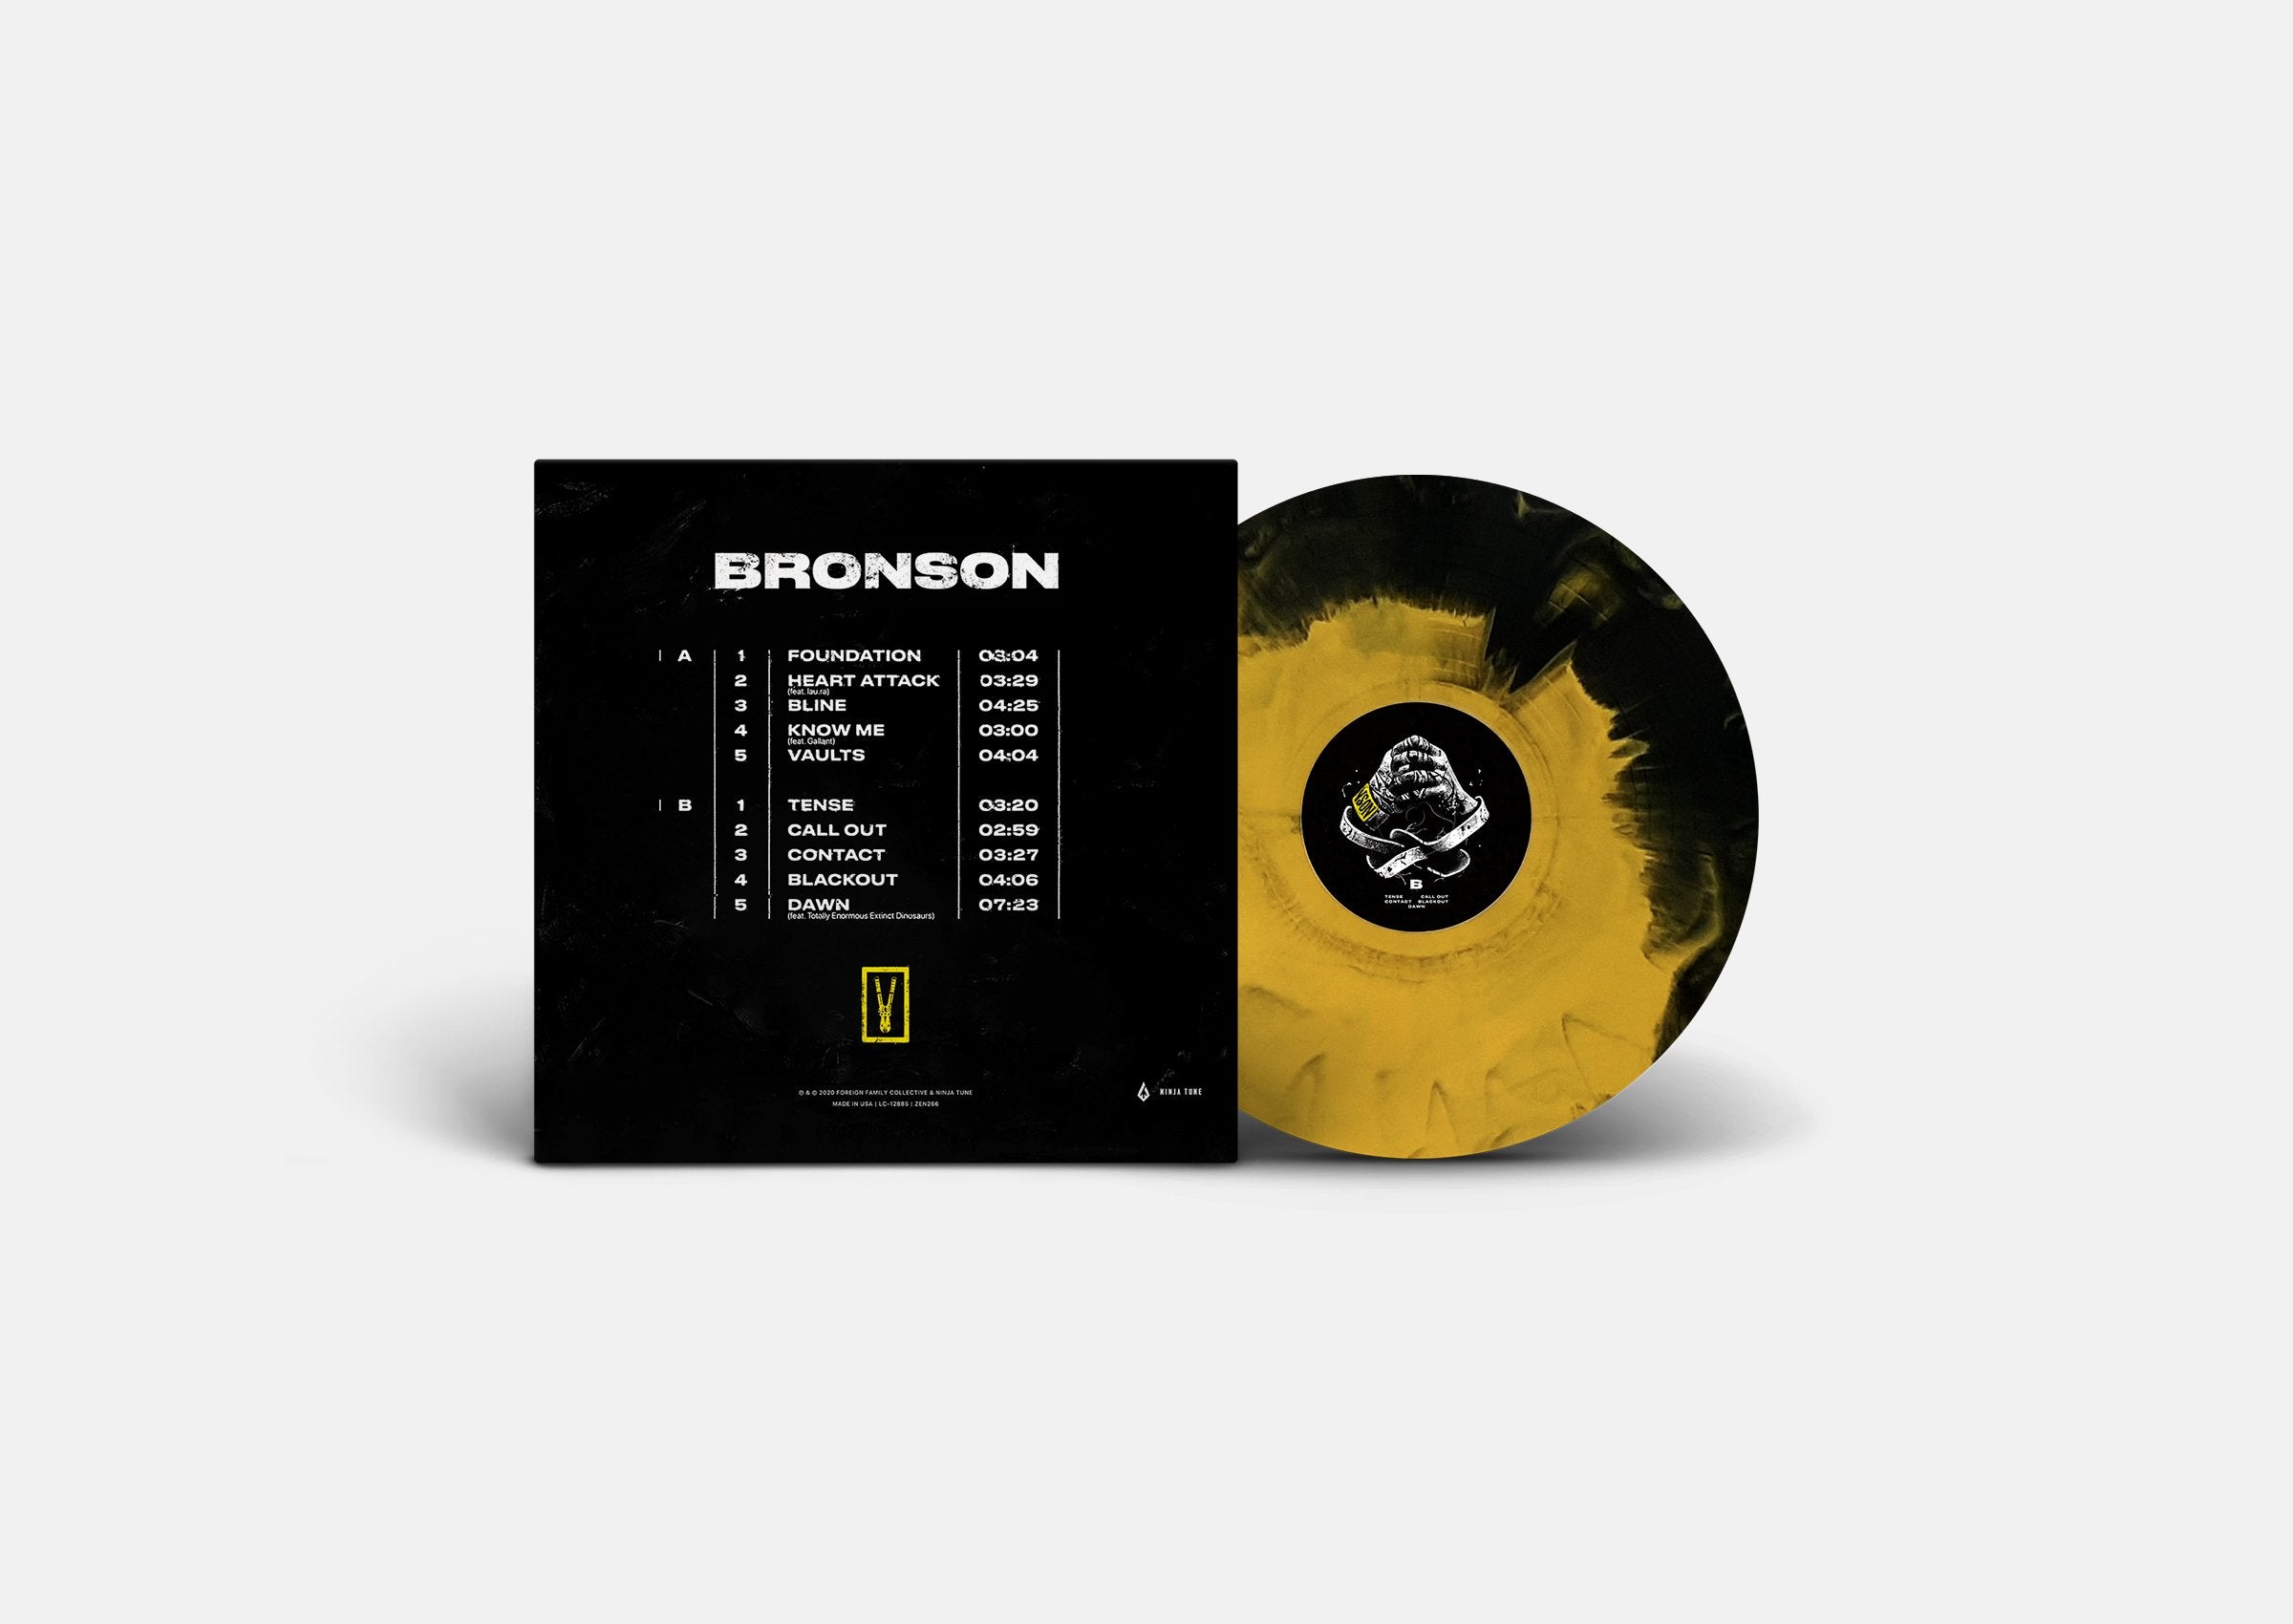 BRONSON Limited Edition LP